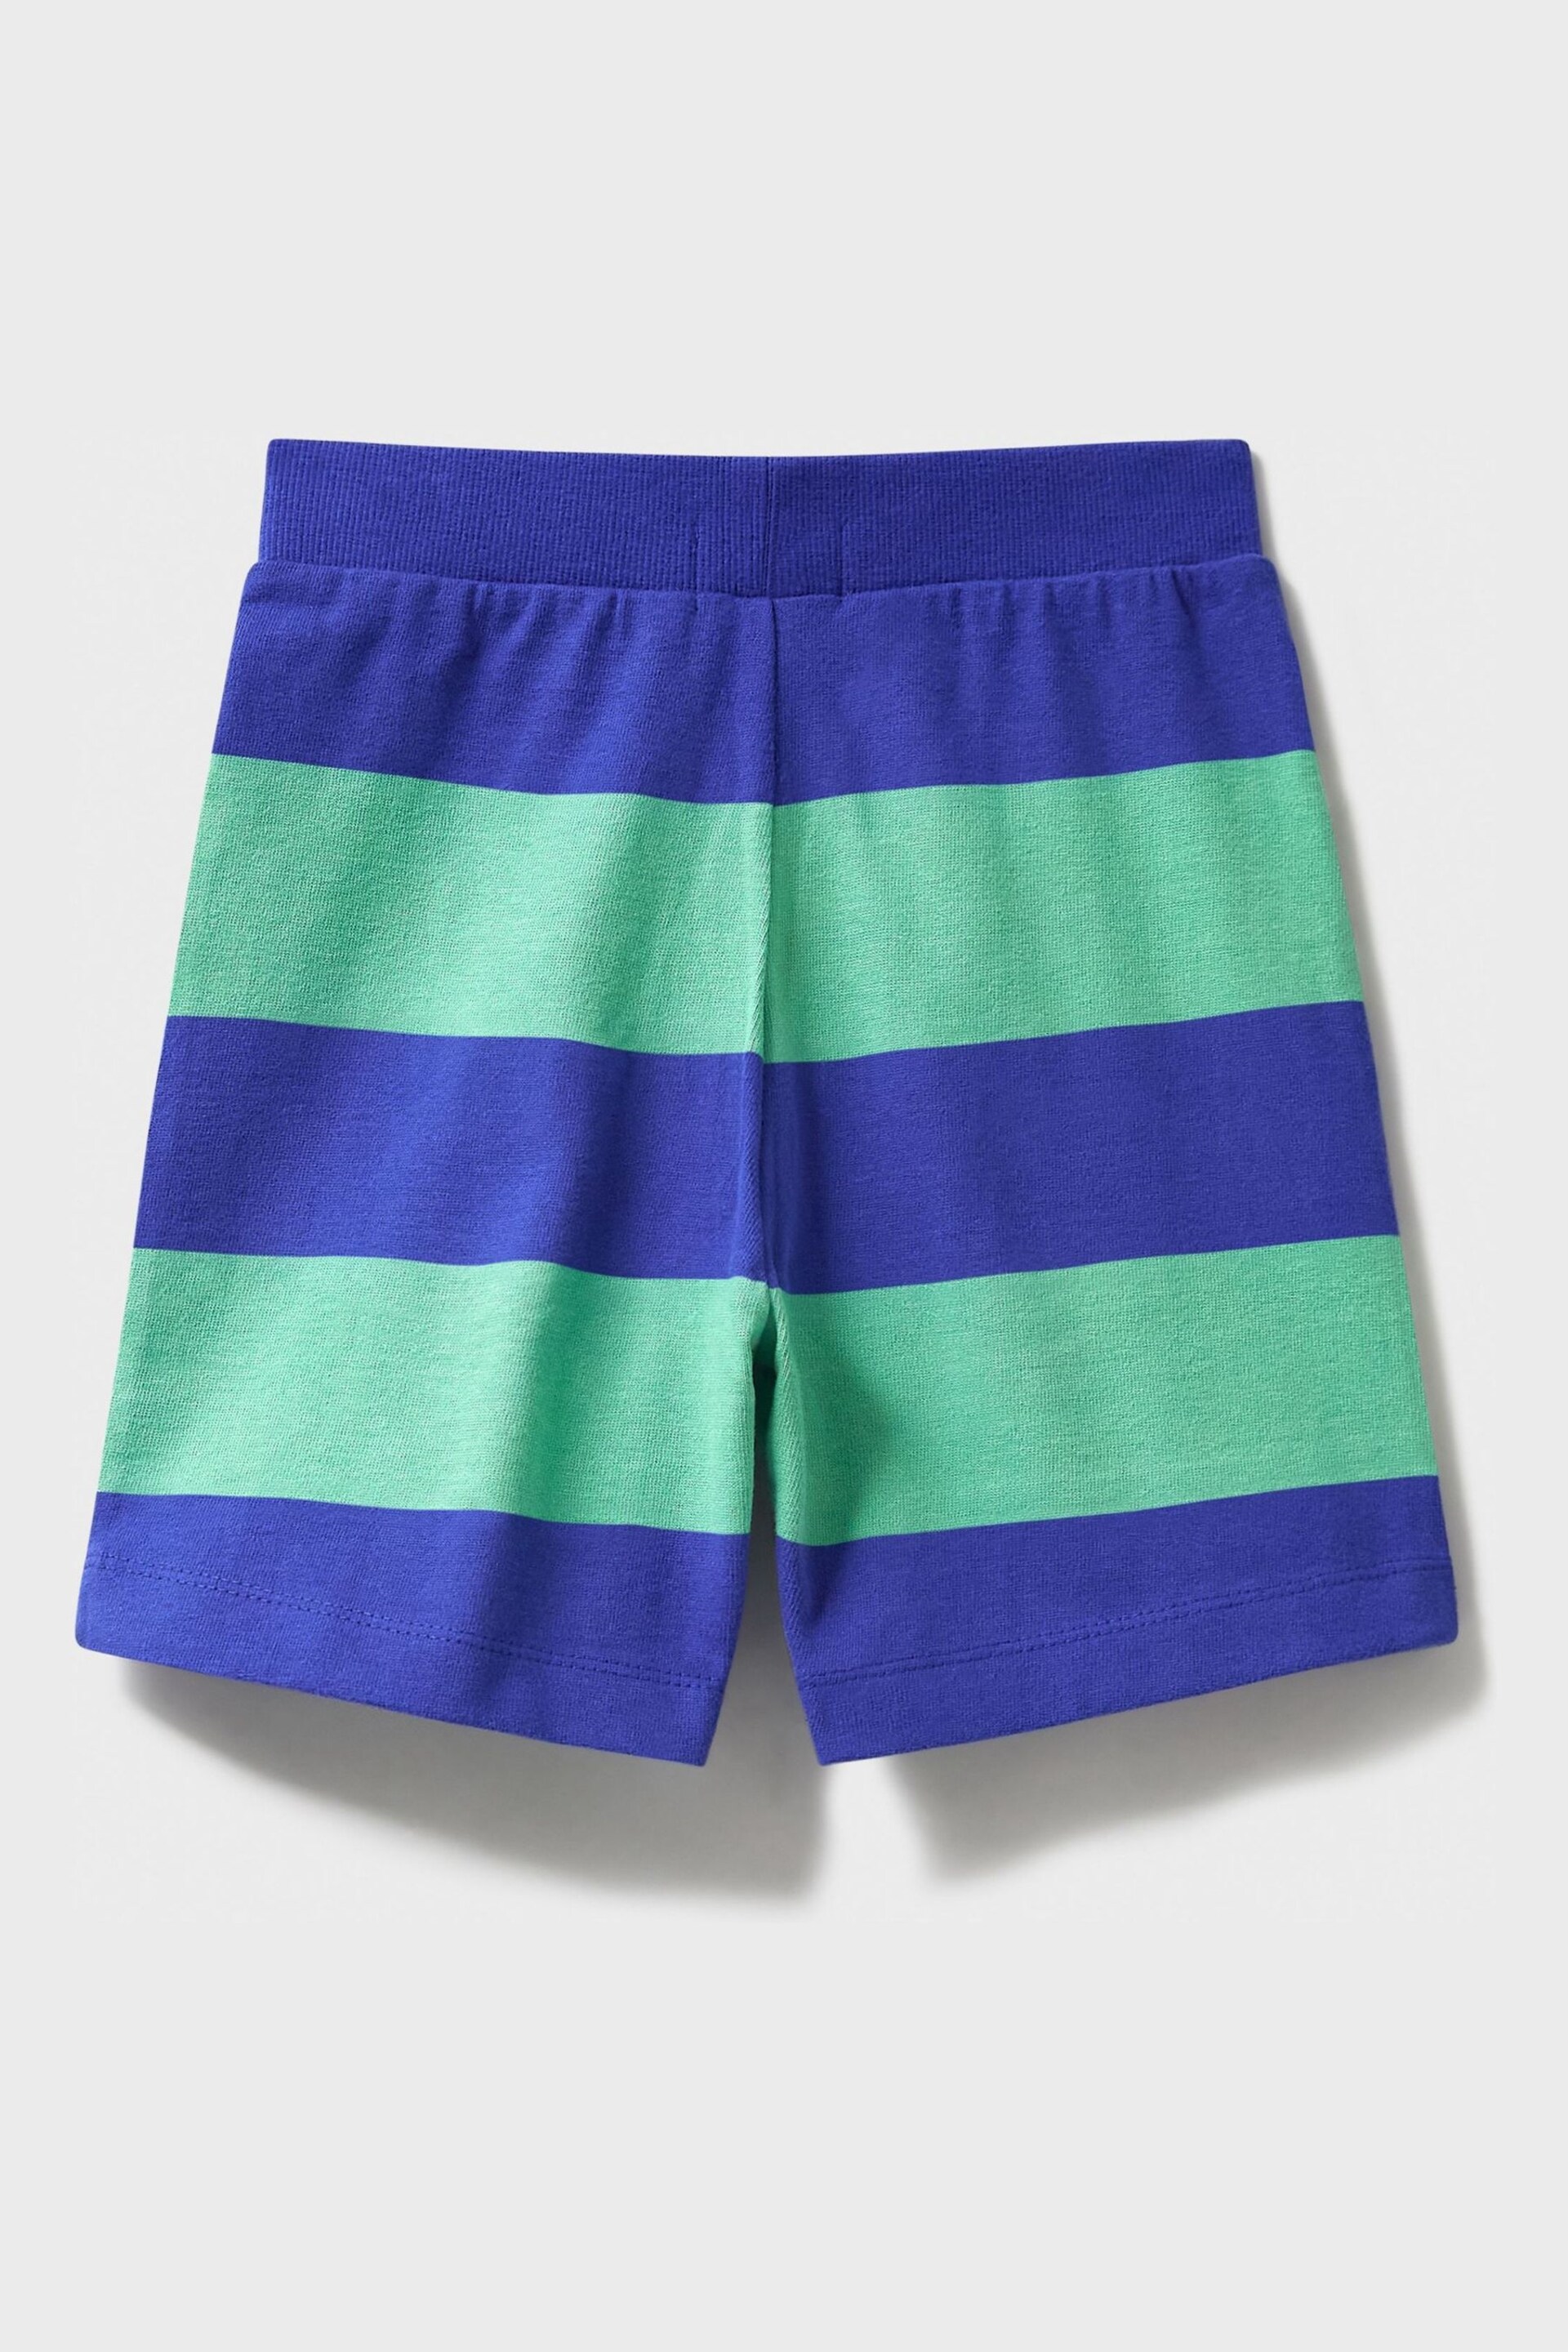 Crew Clothing Stripe Jersey Drawstring Shorts - Image 2 of 3